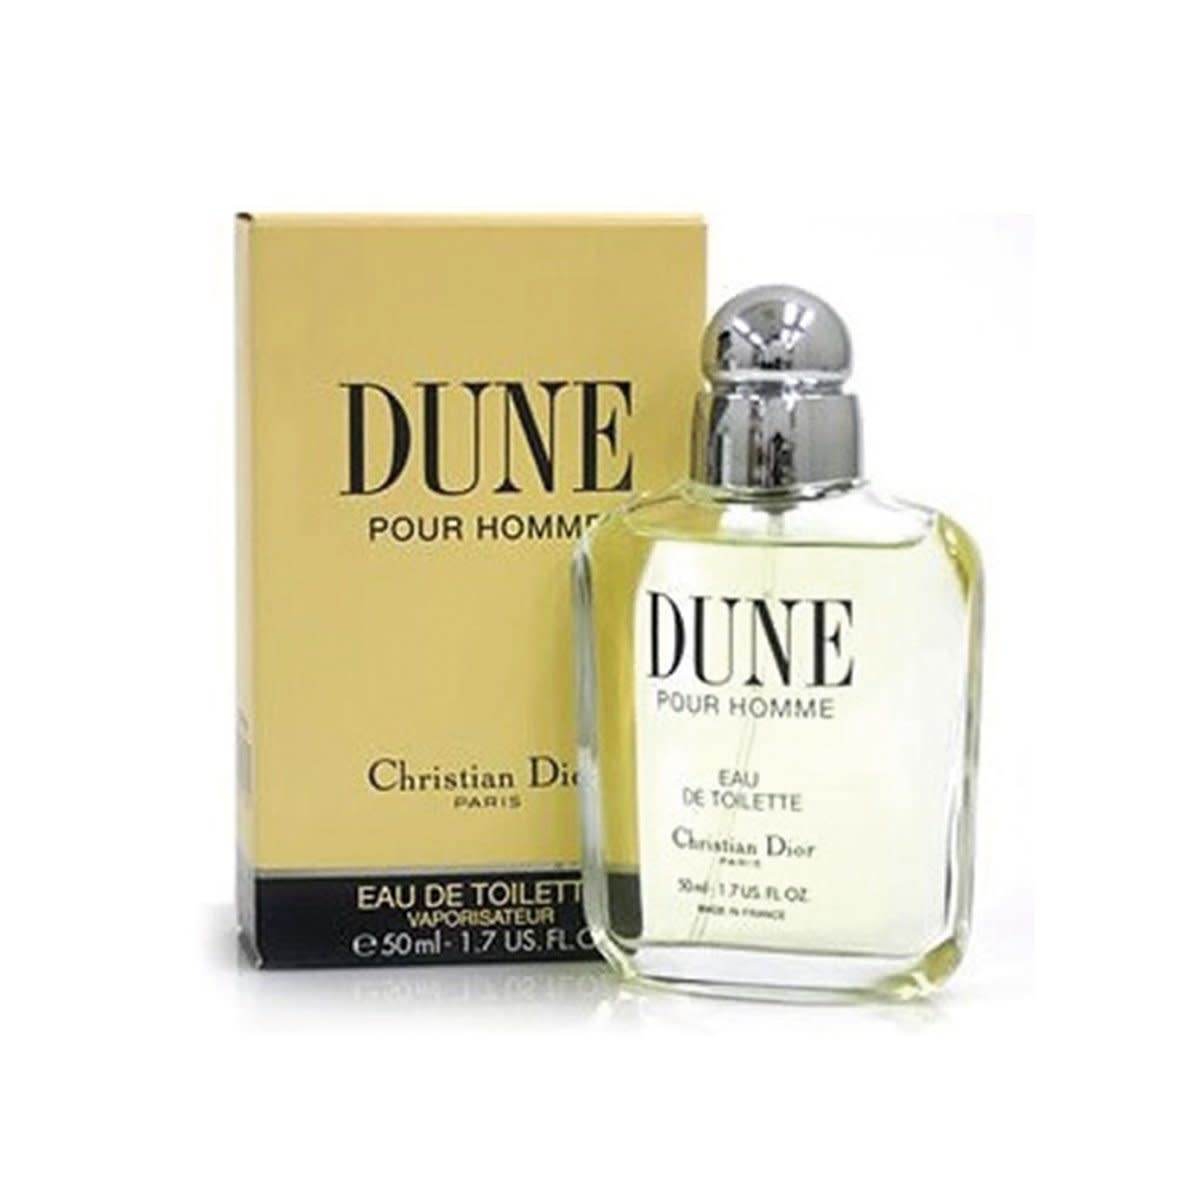 Amazoncom  Dune By Christian Dior For Women Eau De Toilette Spray 34  Ounces  Perfume Dune  Beauty  Personal Care